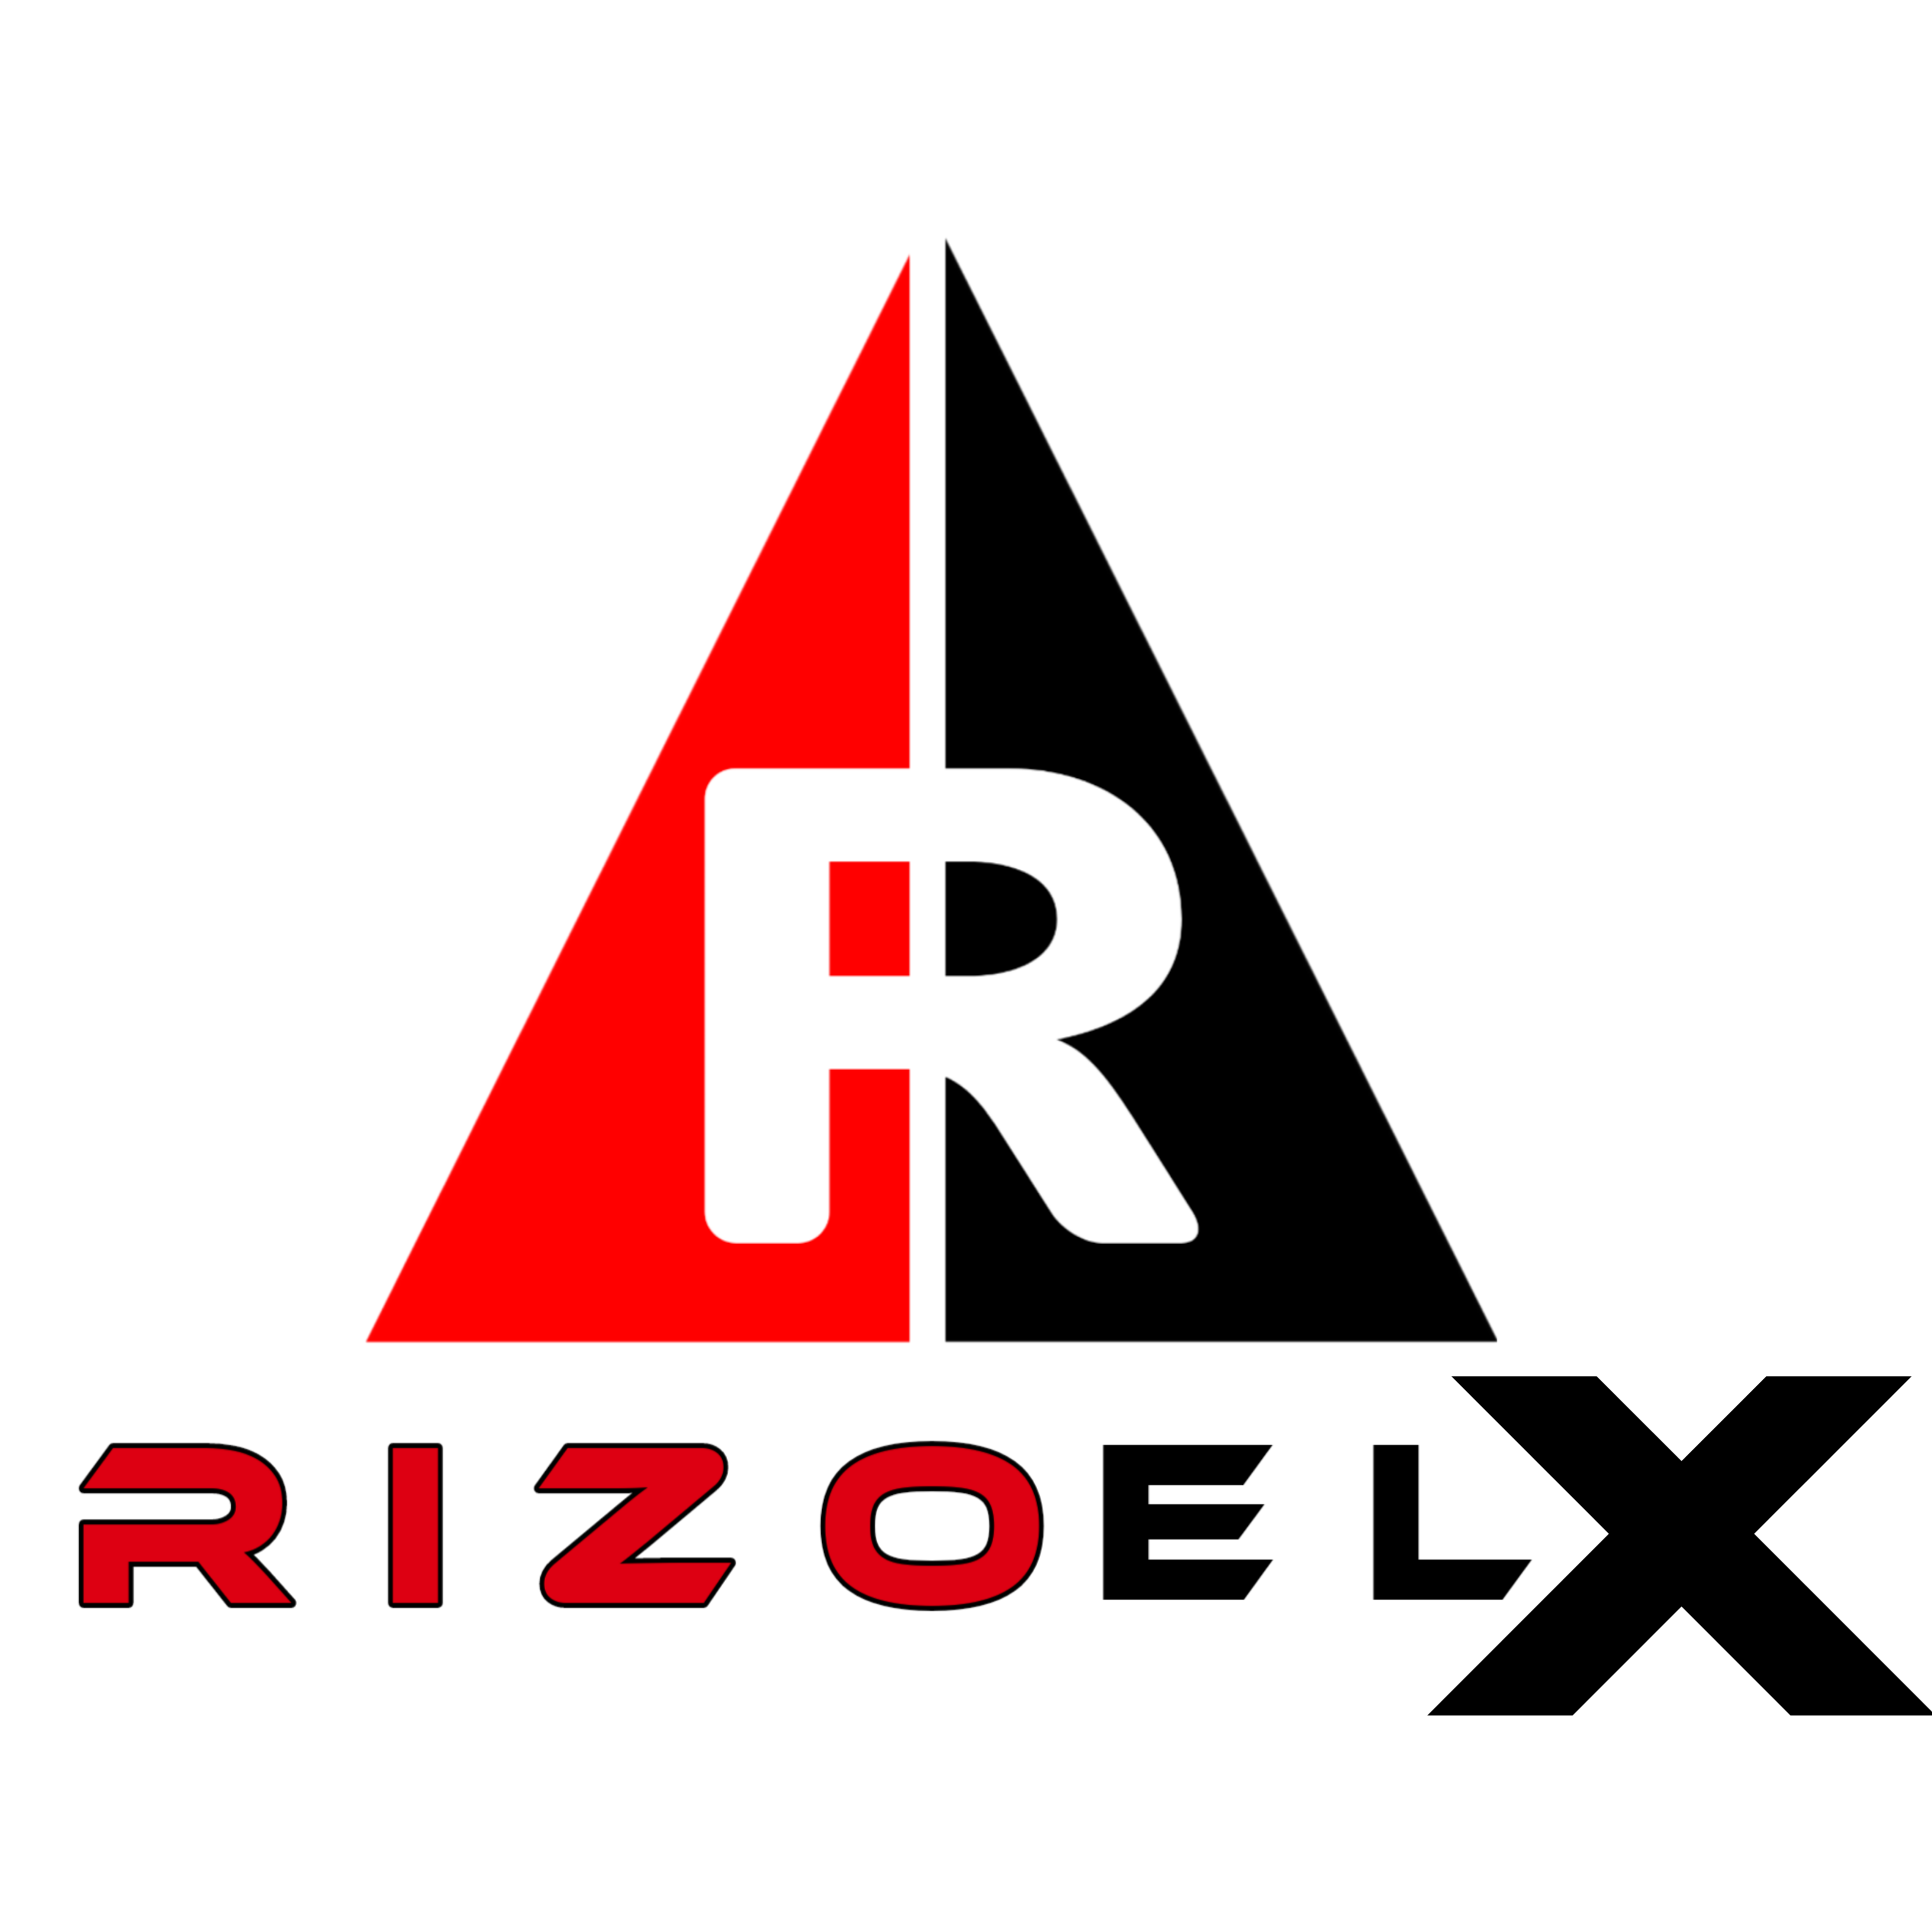 RiZoeLXSpam Logo